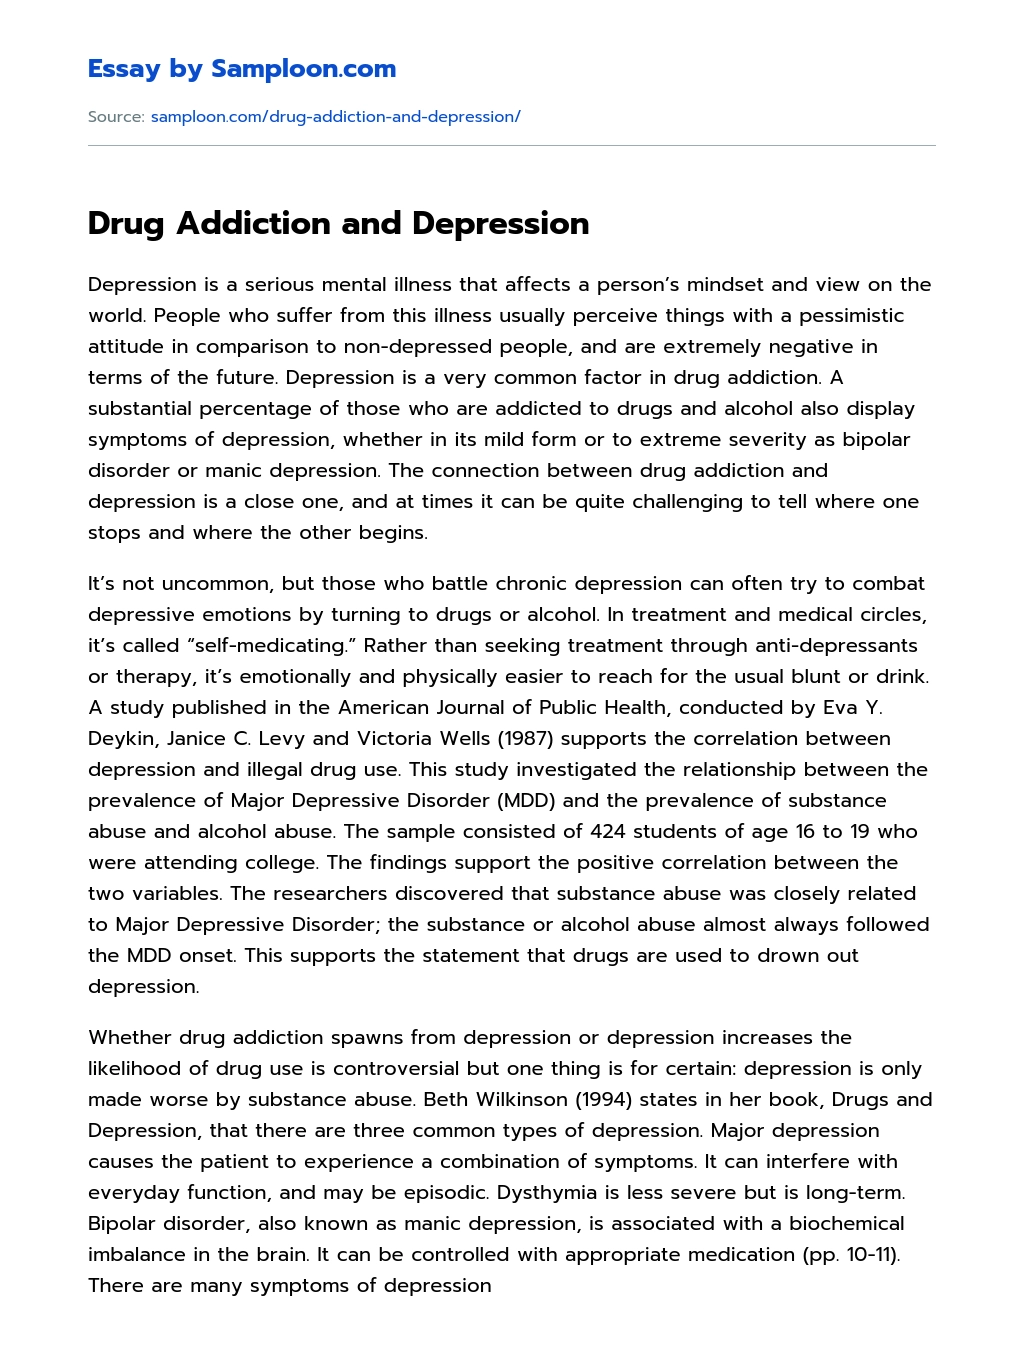 Drug Addiction and Depression essay